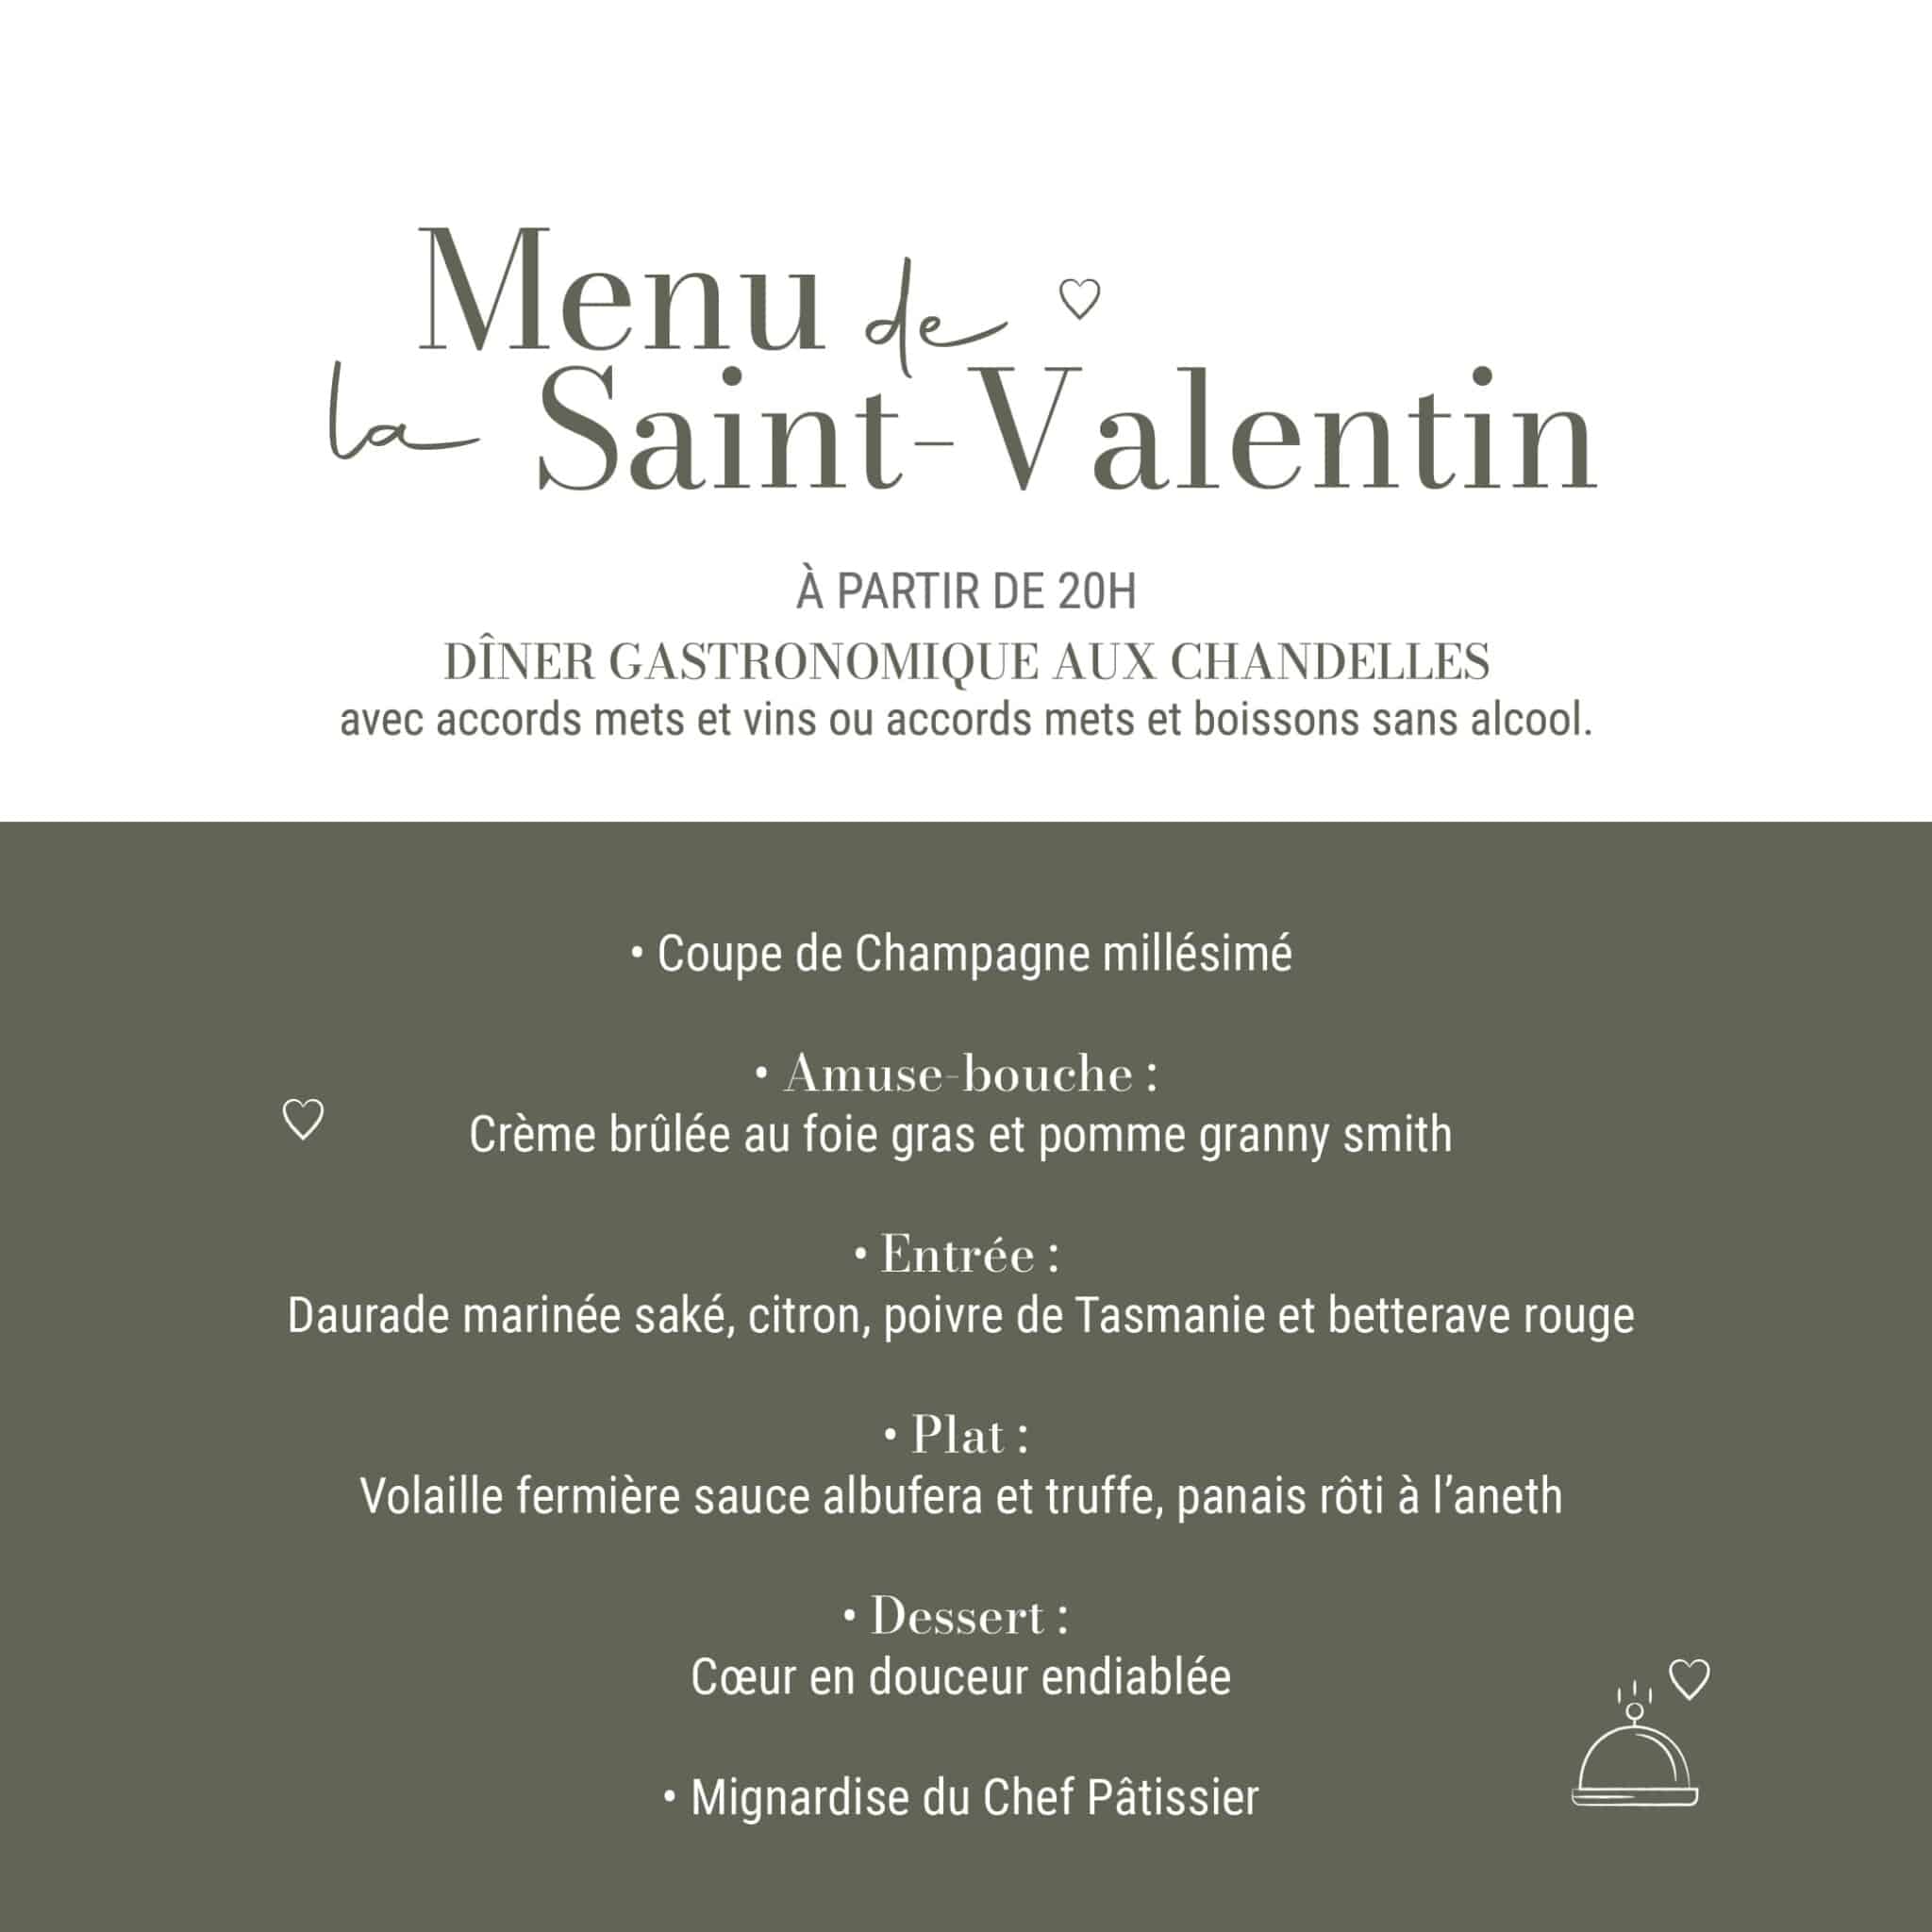 Mercredi 14 Février] Saint Valentin 2024 - Restaurant Dans les Etoiles -  Cergy